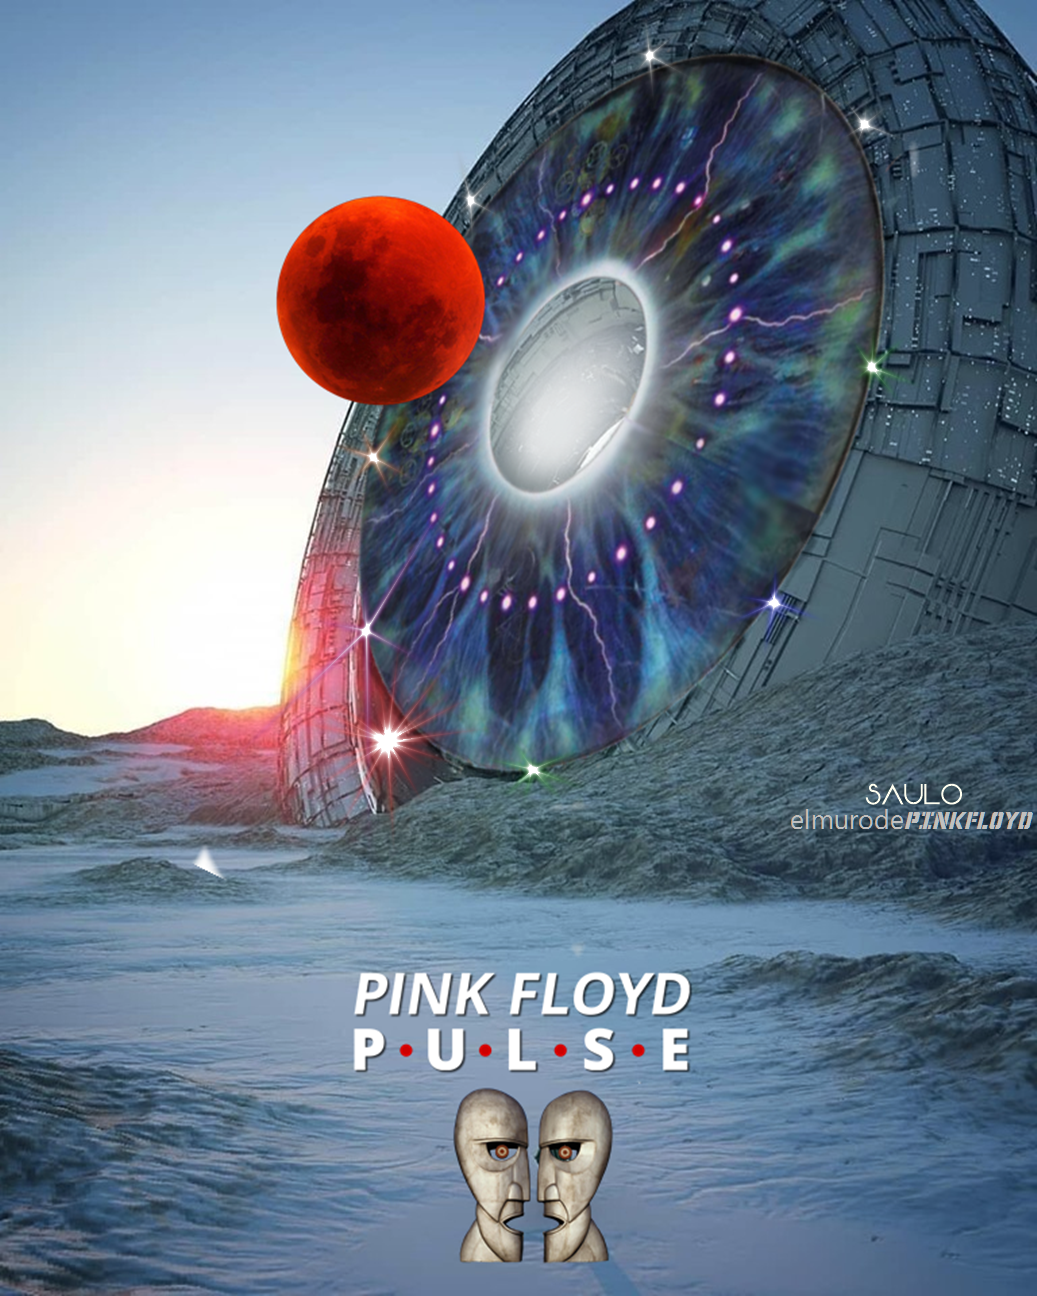 Pink Floyd Pulse. Pink floyd art, Pink floyd artwork, Pink floyd poster